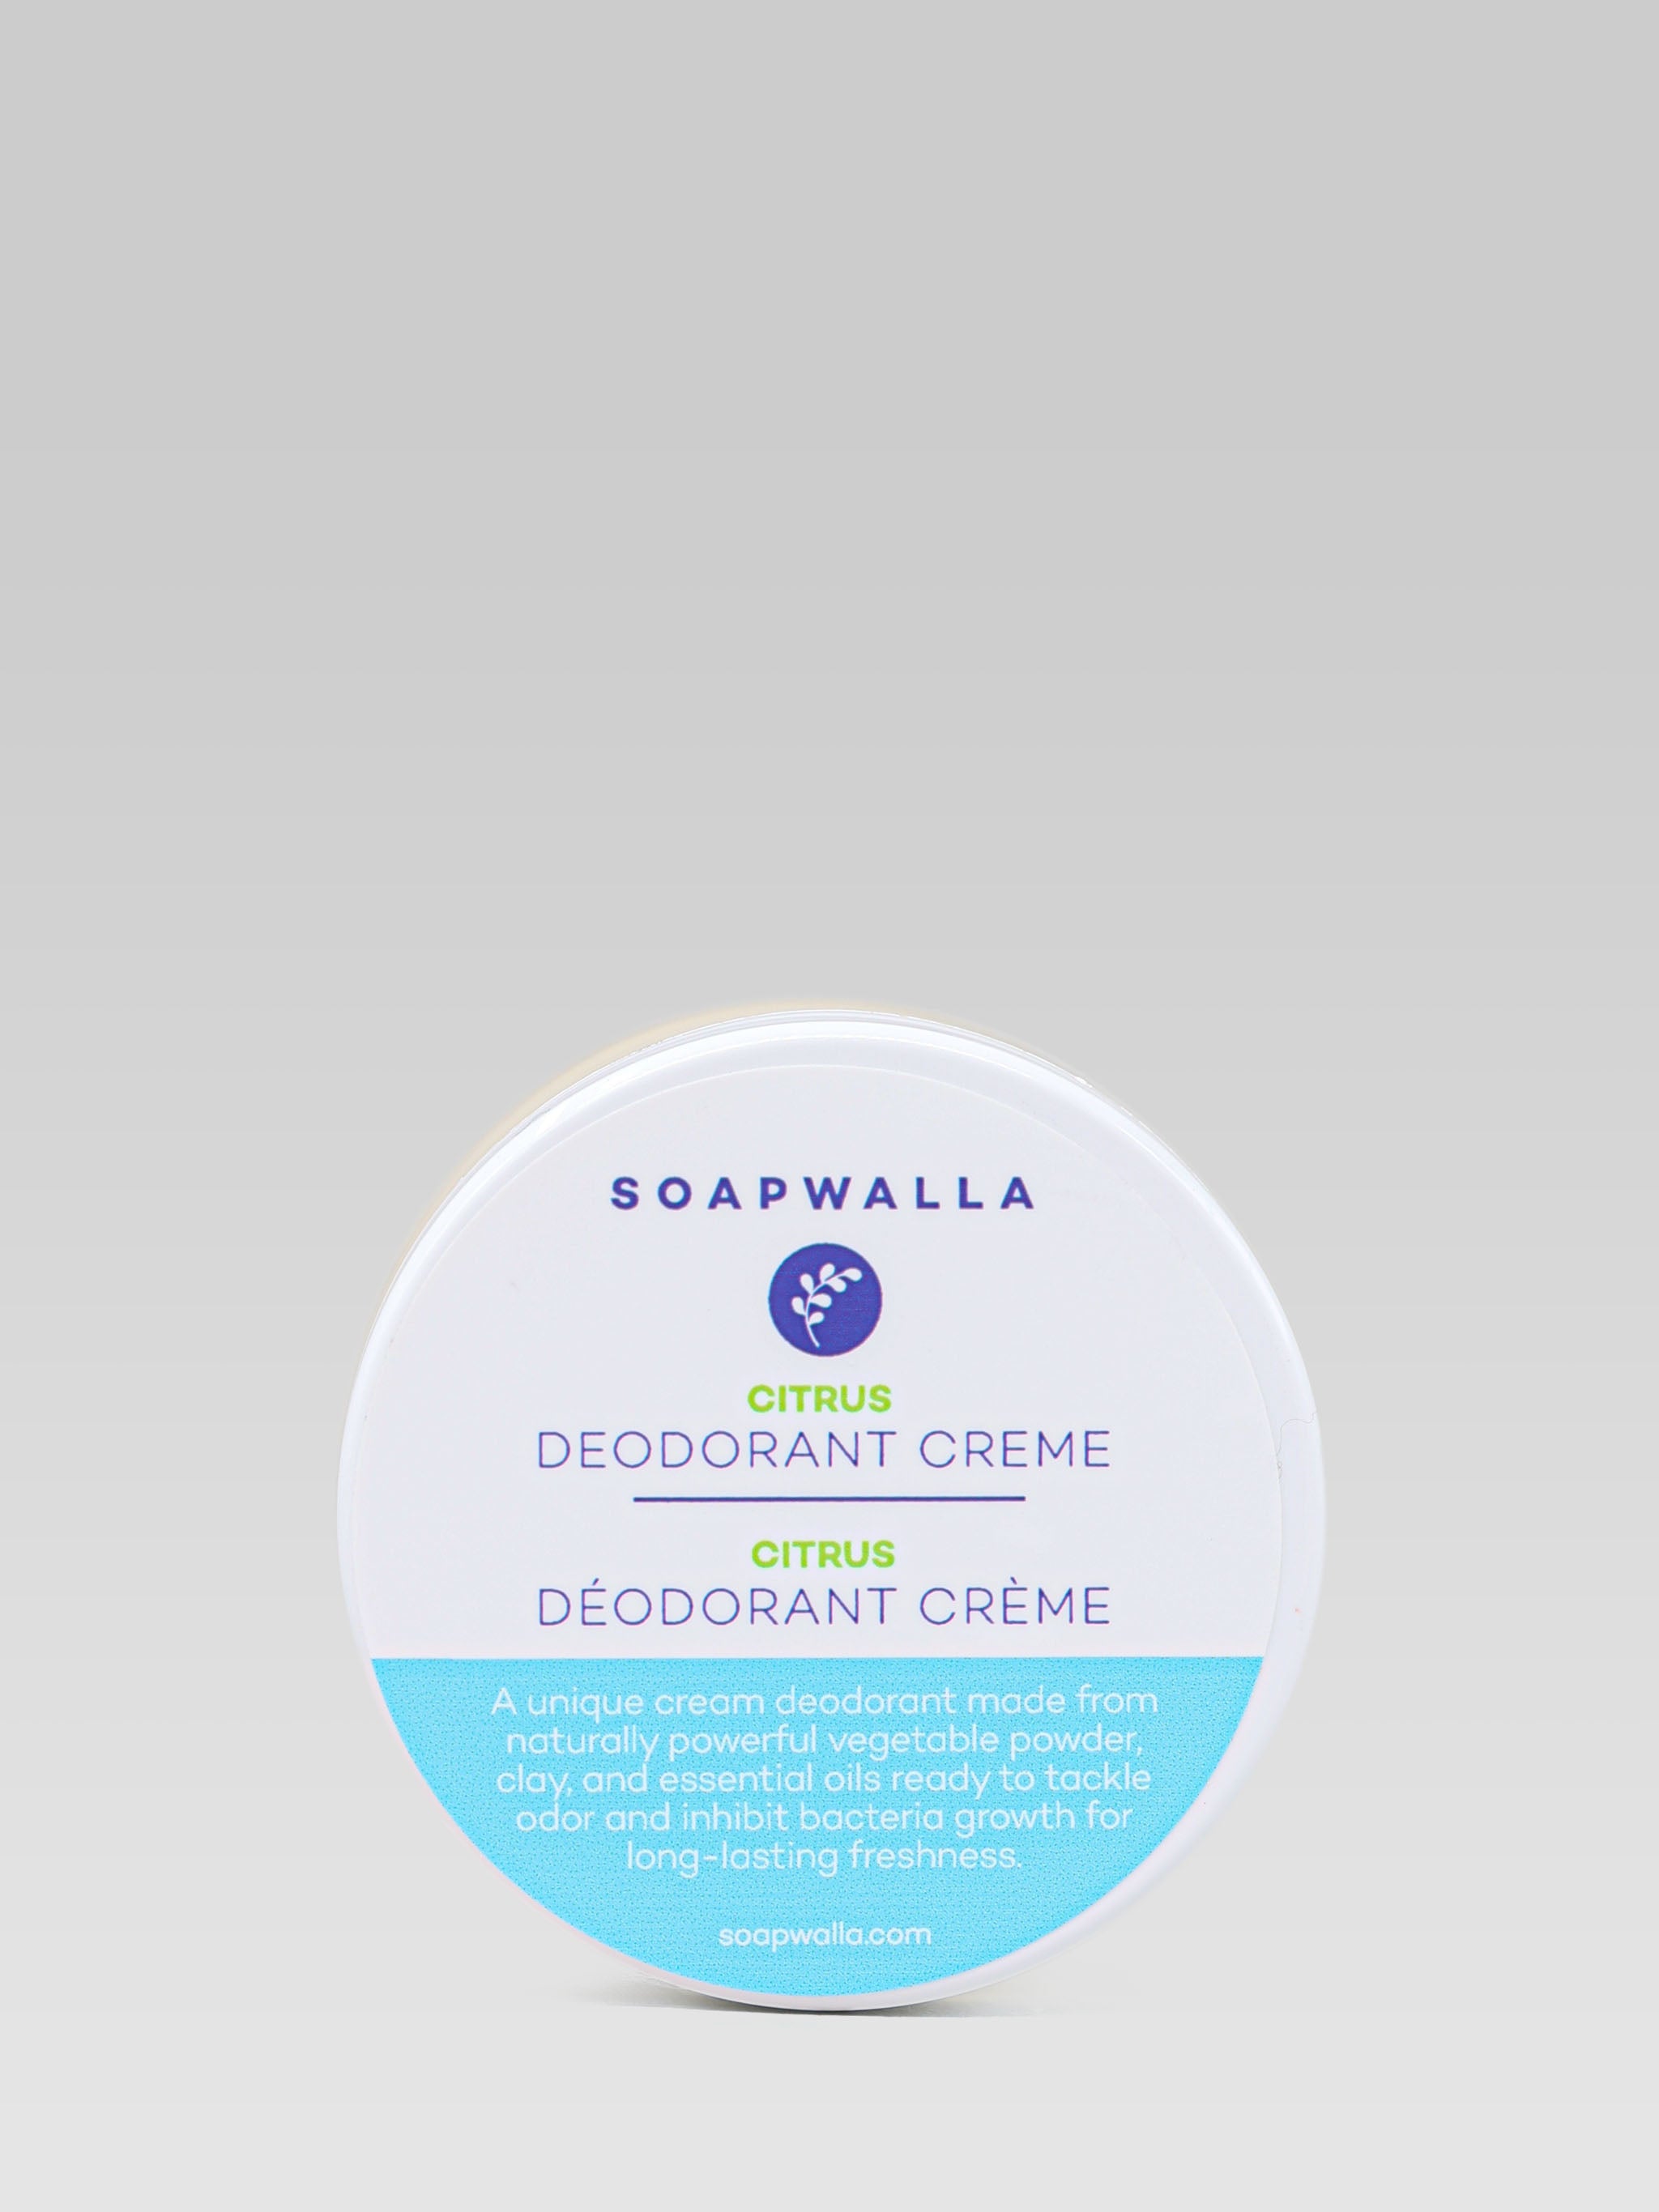 SOAPWALLA Deodorant Cream Citrus product shot